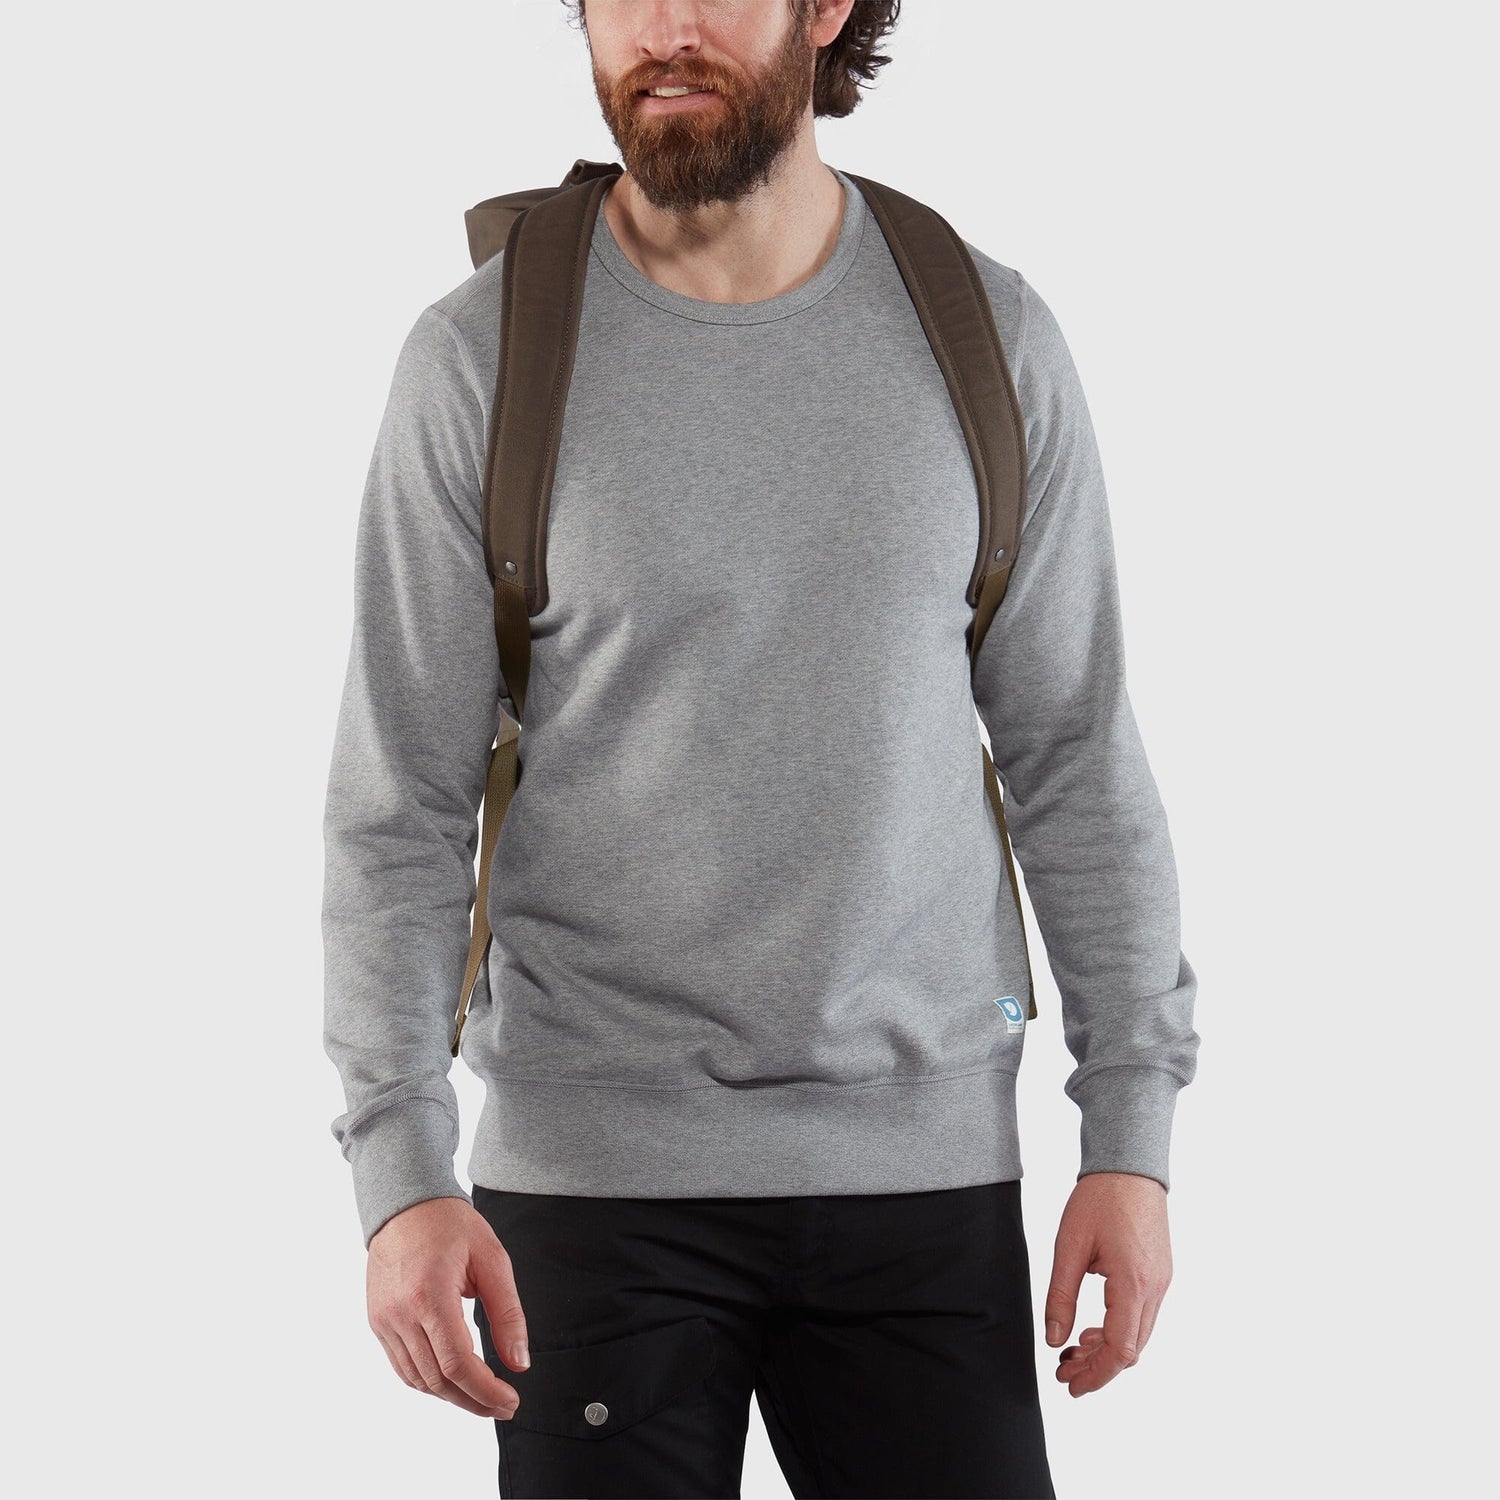 Fjällräven - Splitpack Backpack 35l - Recycled Polyester & Organic Cotton - Weekendbee - sustainable sportswear